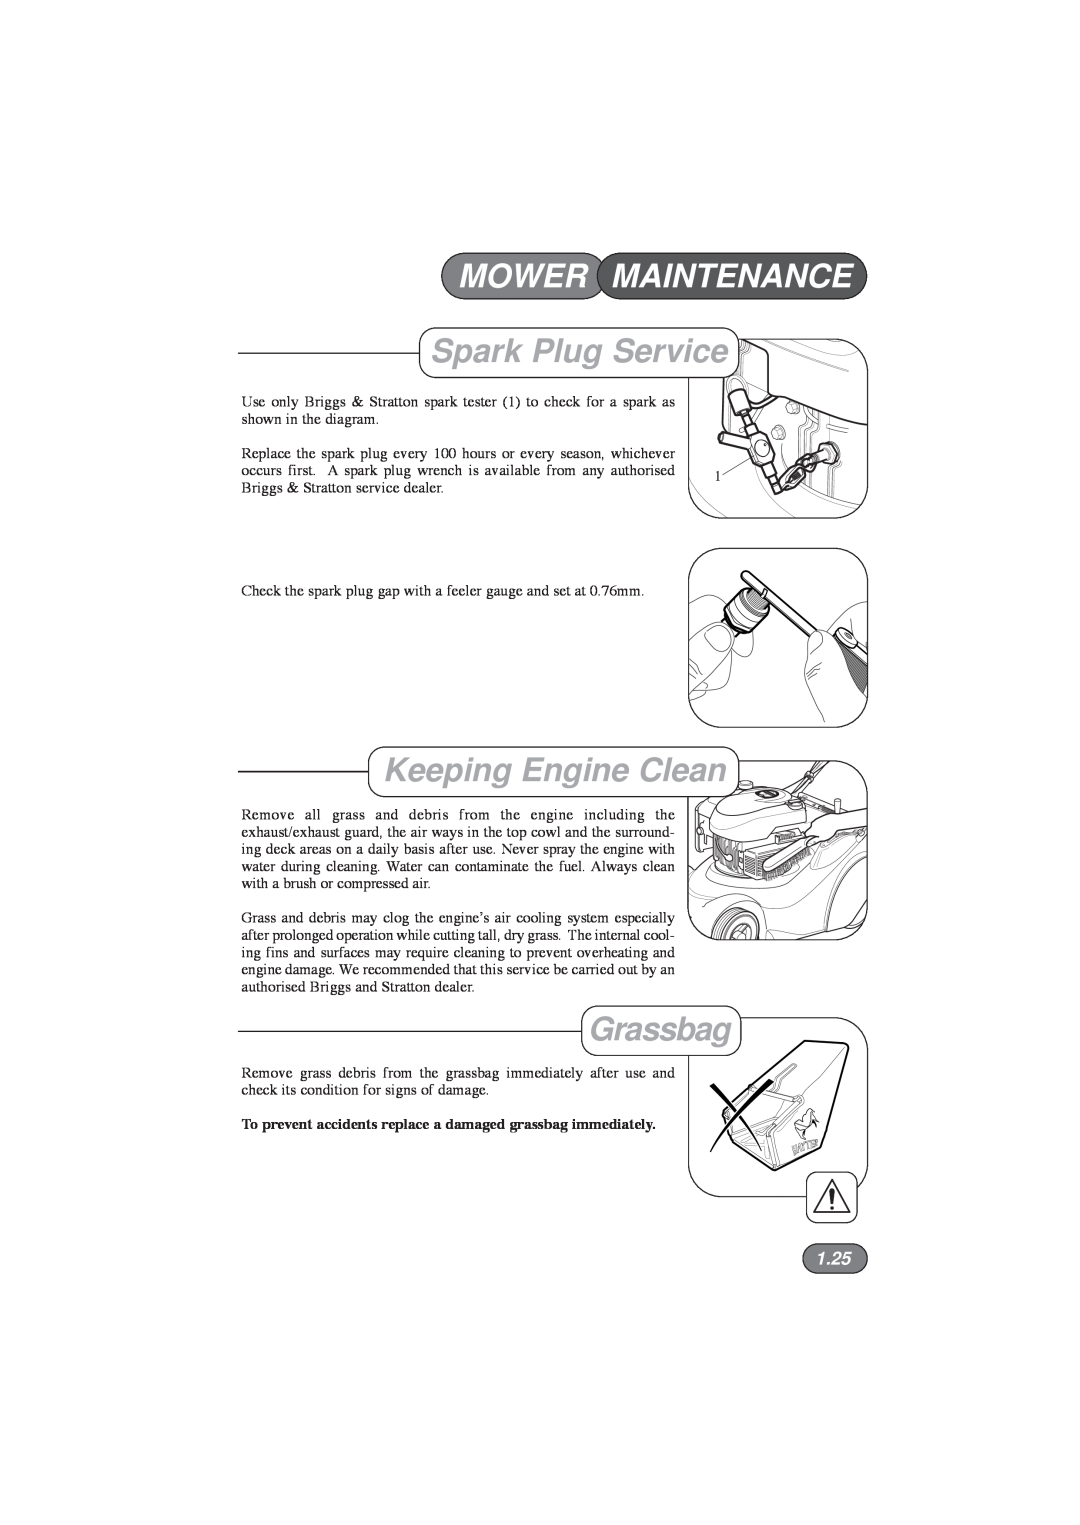 Hayter Mowers 413E, 412E, 410E manual Spark Plug Service, Keeping Engine Clean, 1.25, Mower Maintenance, Grassbag 